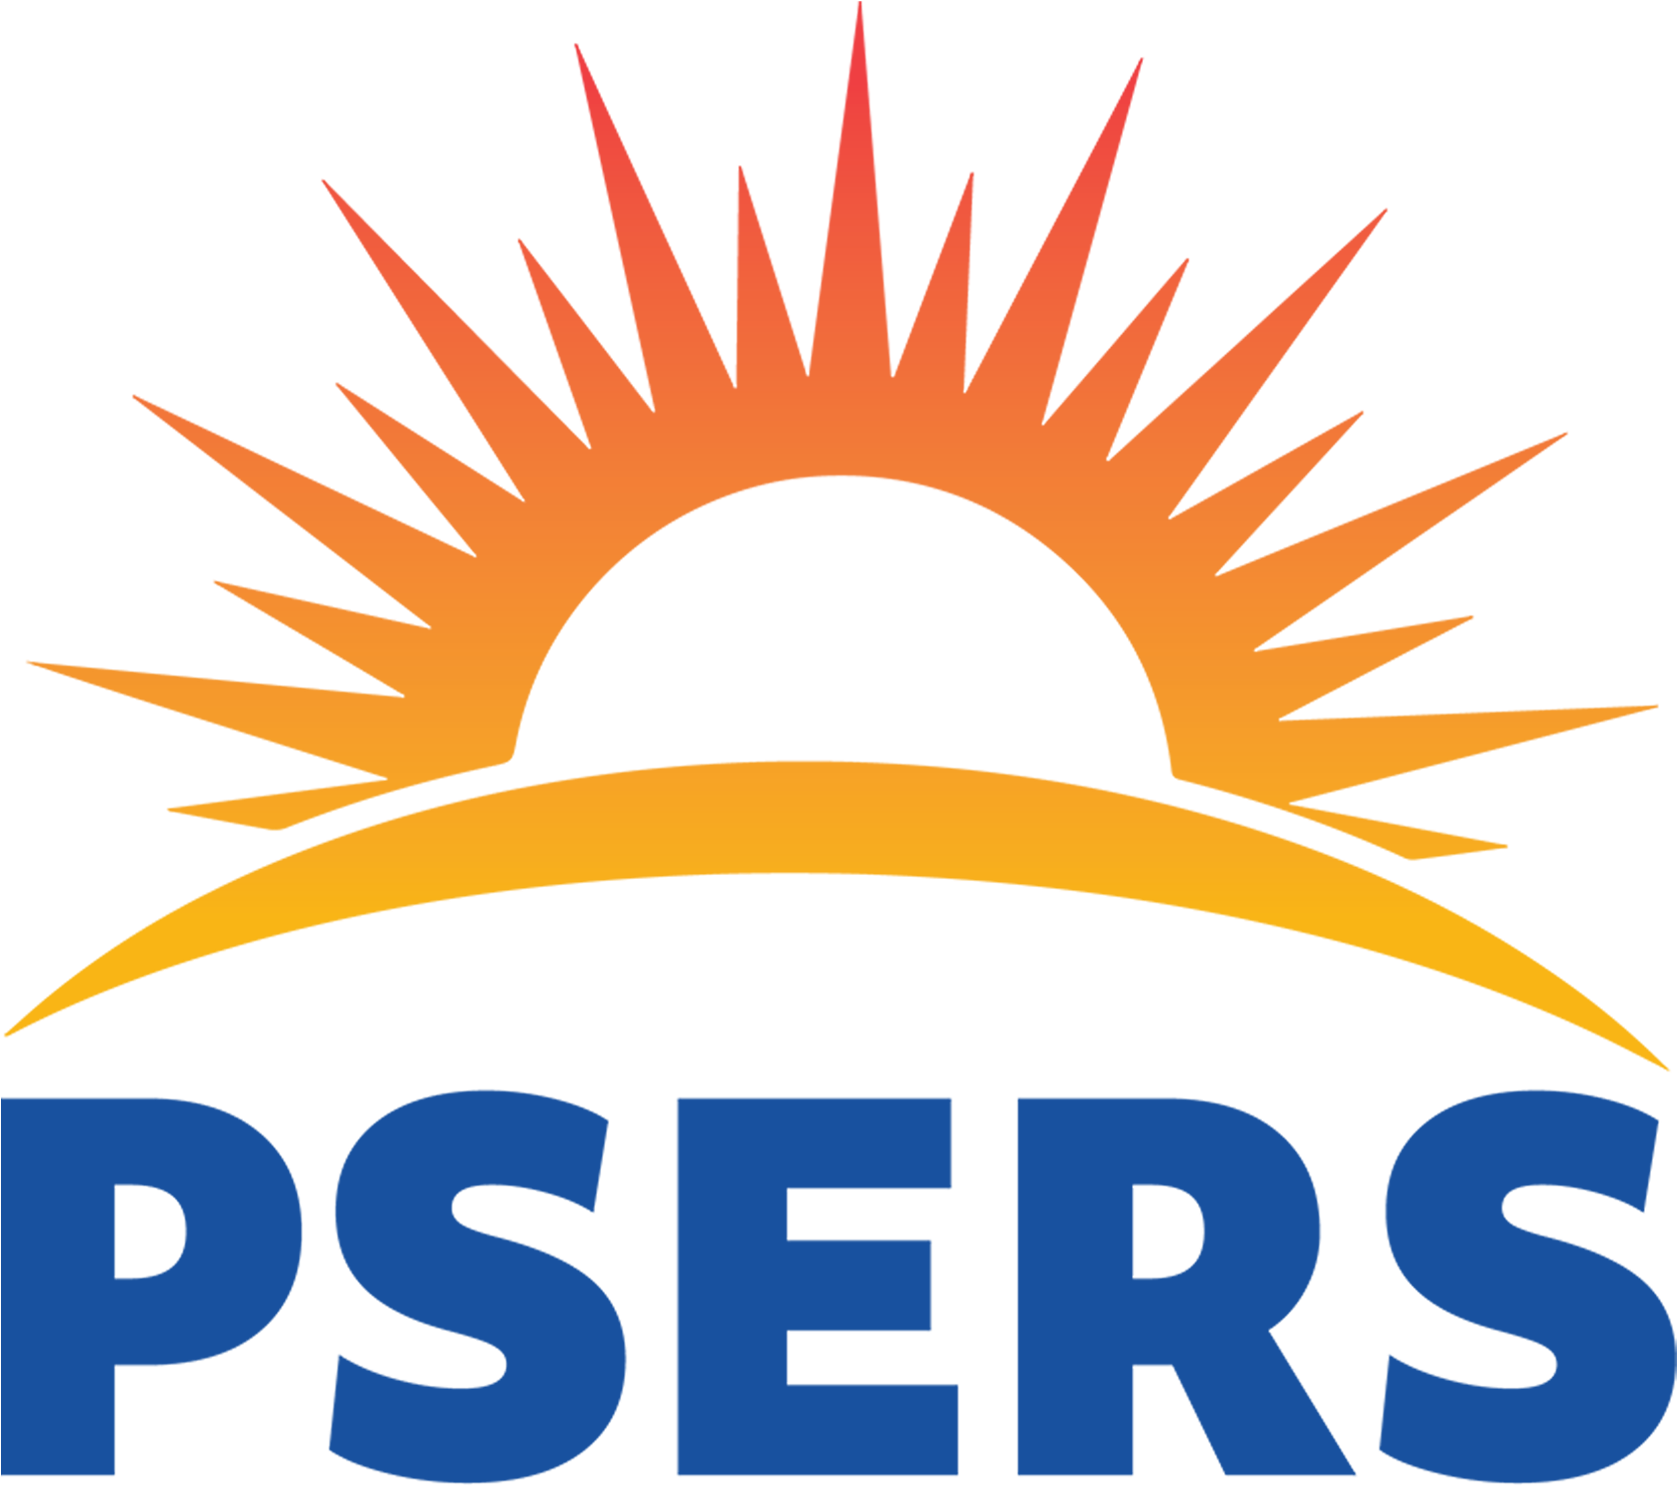 P S E R S Logo Pennsylvania Retirement System